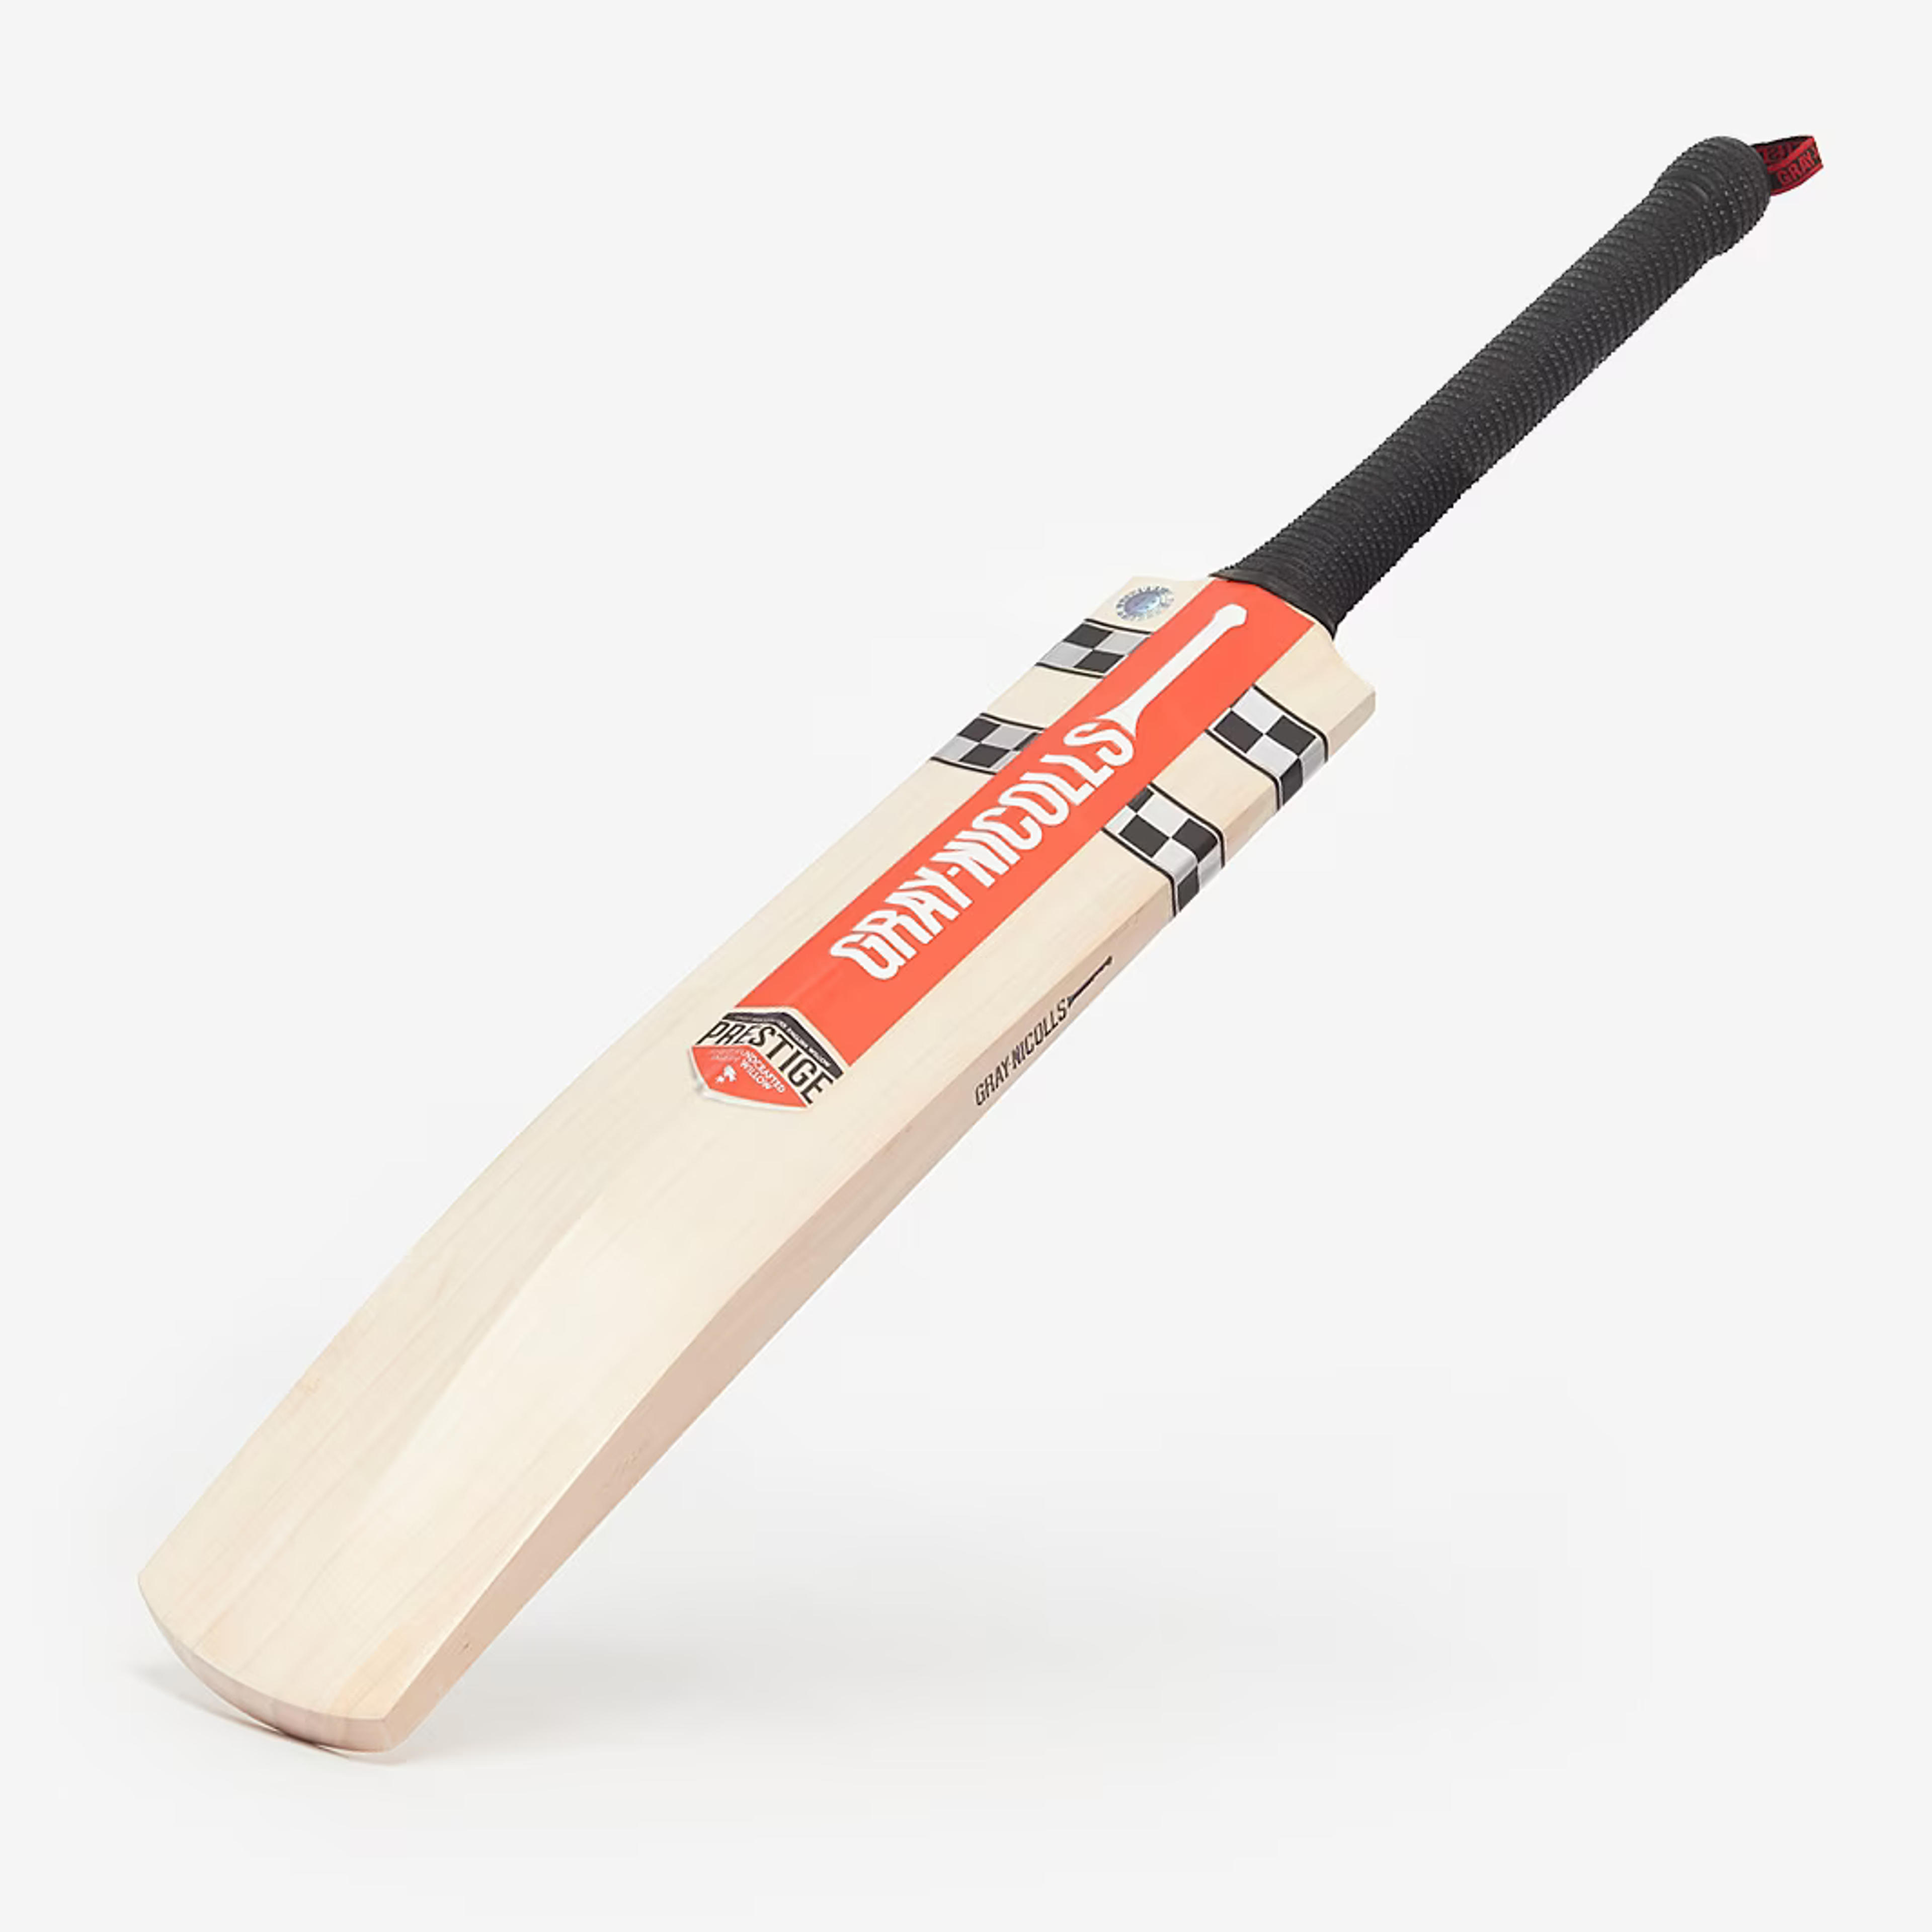 Gray-Nicolls Prestige Cricket Bat - Red/Silver/Black